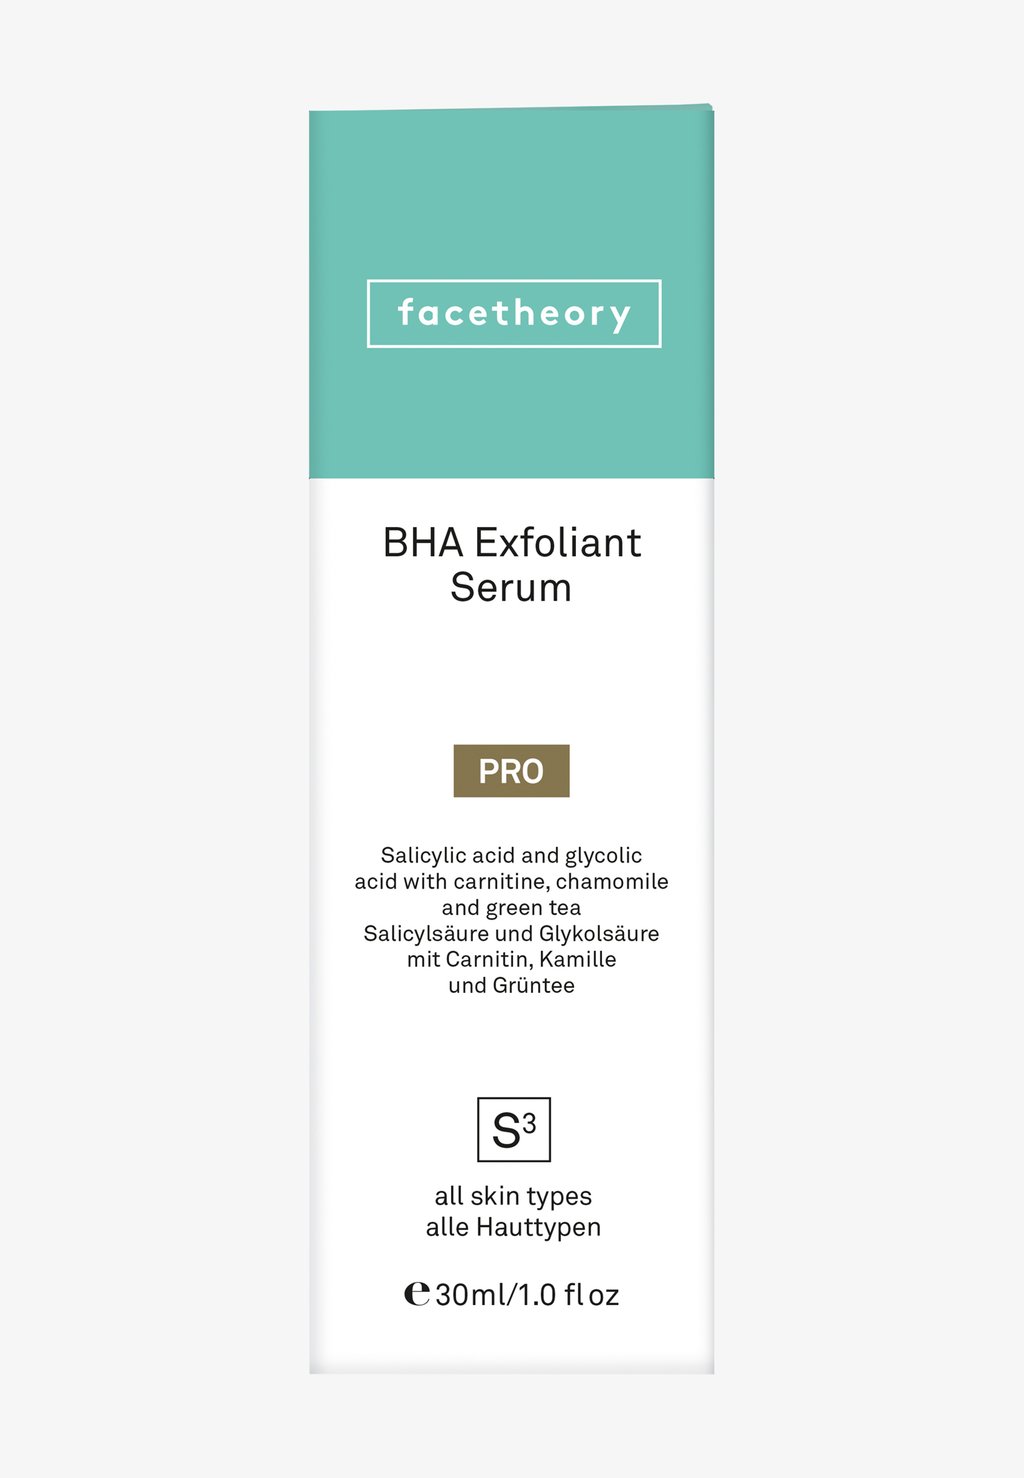 Сыворотка Bha Exfoliant Serum Pro facetheory